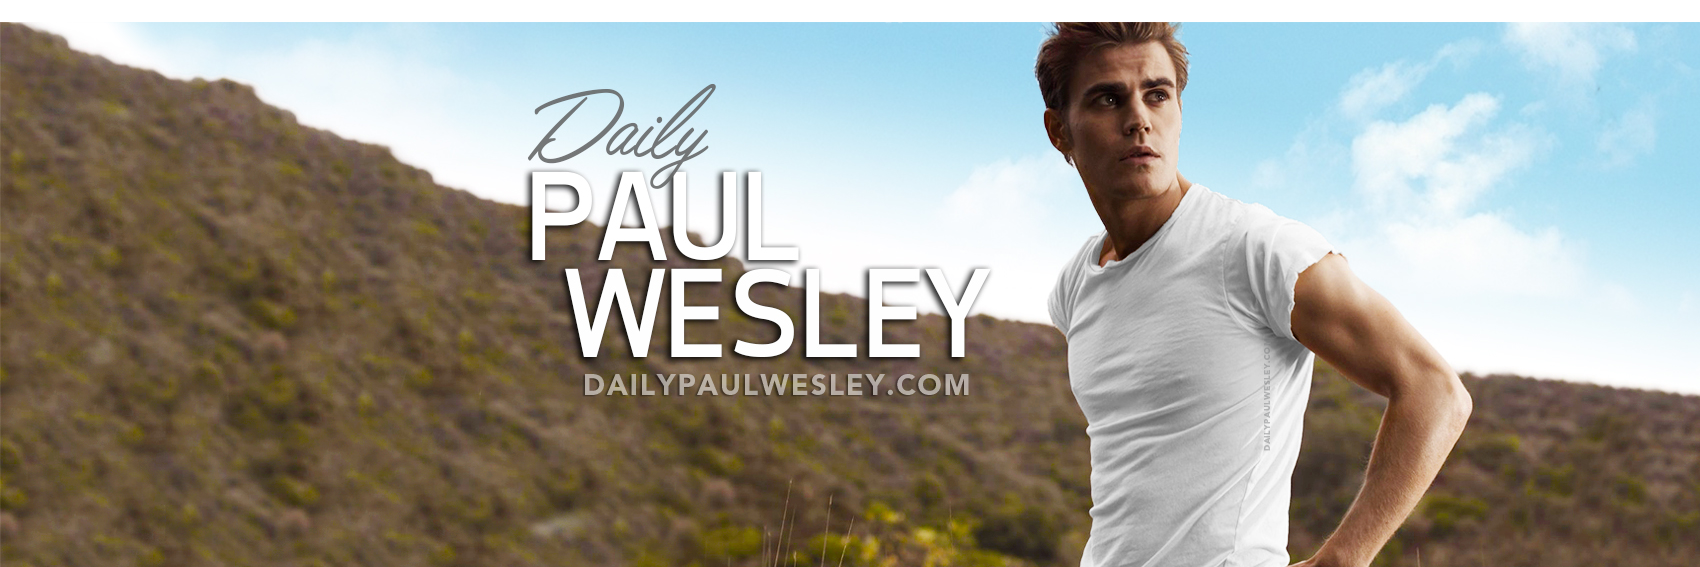 Paul Wesley Daily